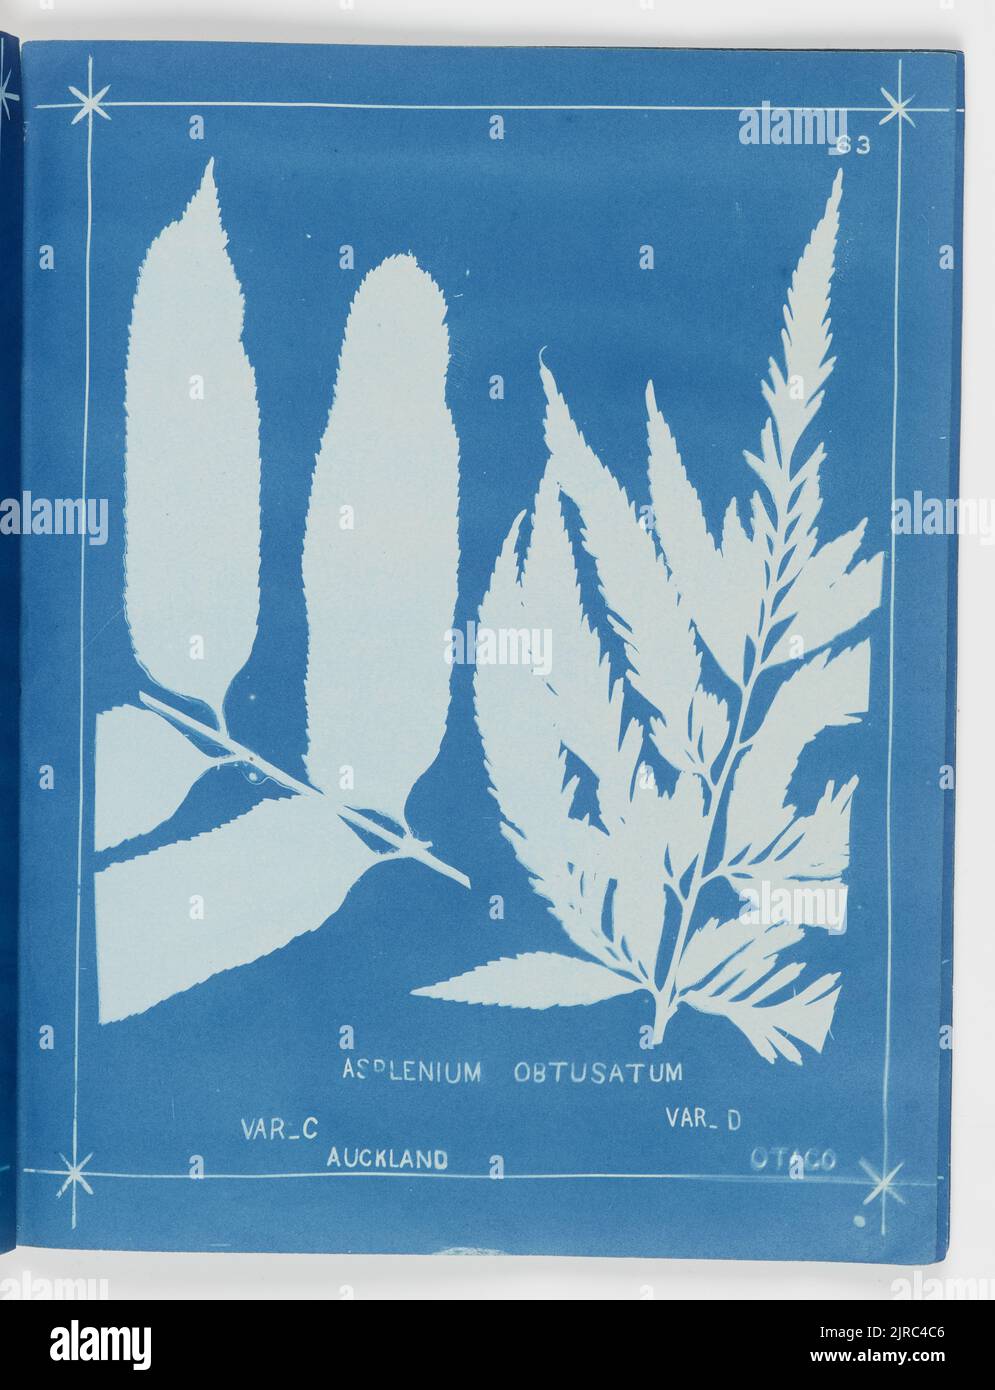 Asplenium obtusatum var. C, Auckland and var. D, Otago. From the album: New Zealand ferns,148 varieties, 1880, Auckland, by Herbert Dobbie. Stock Photo